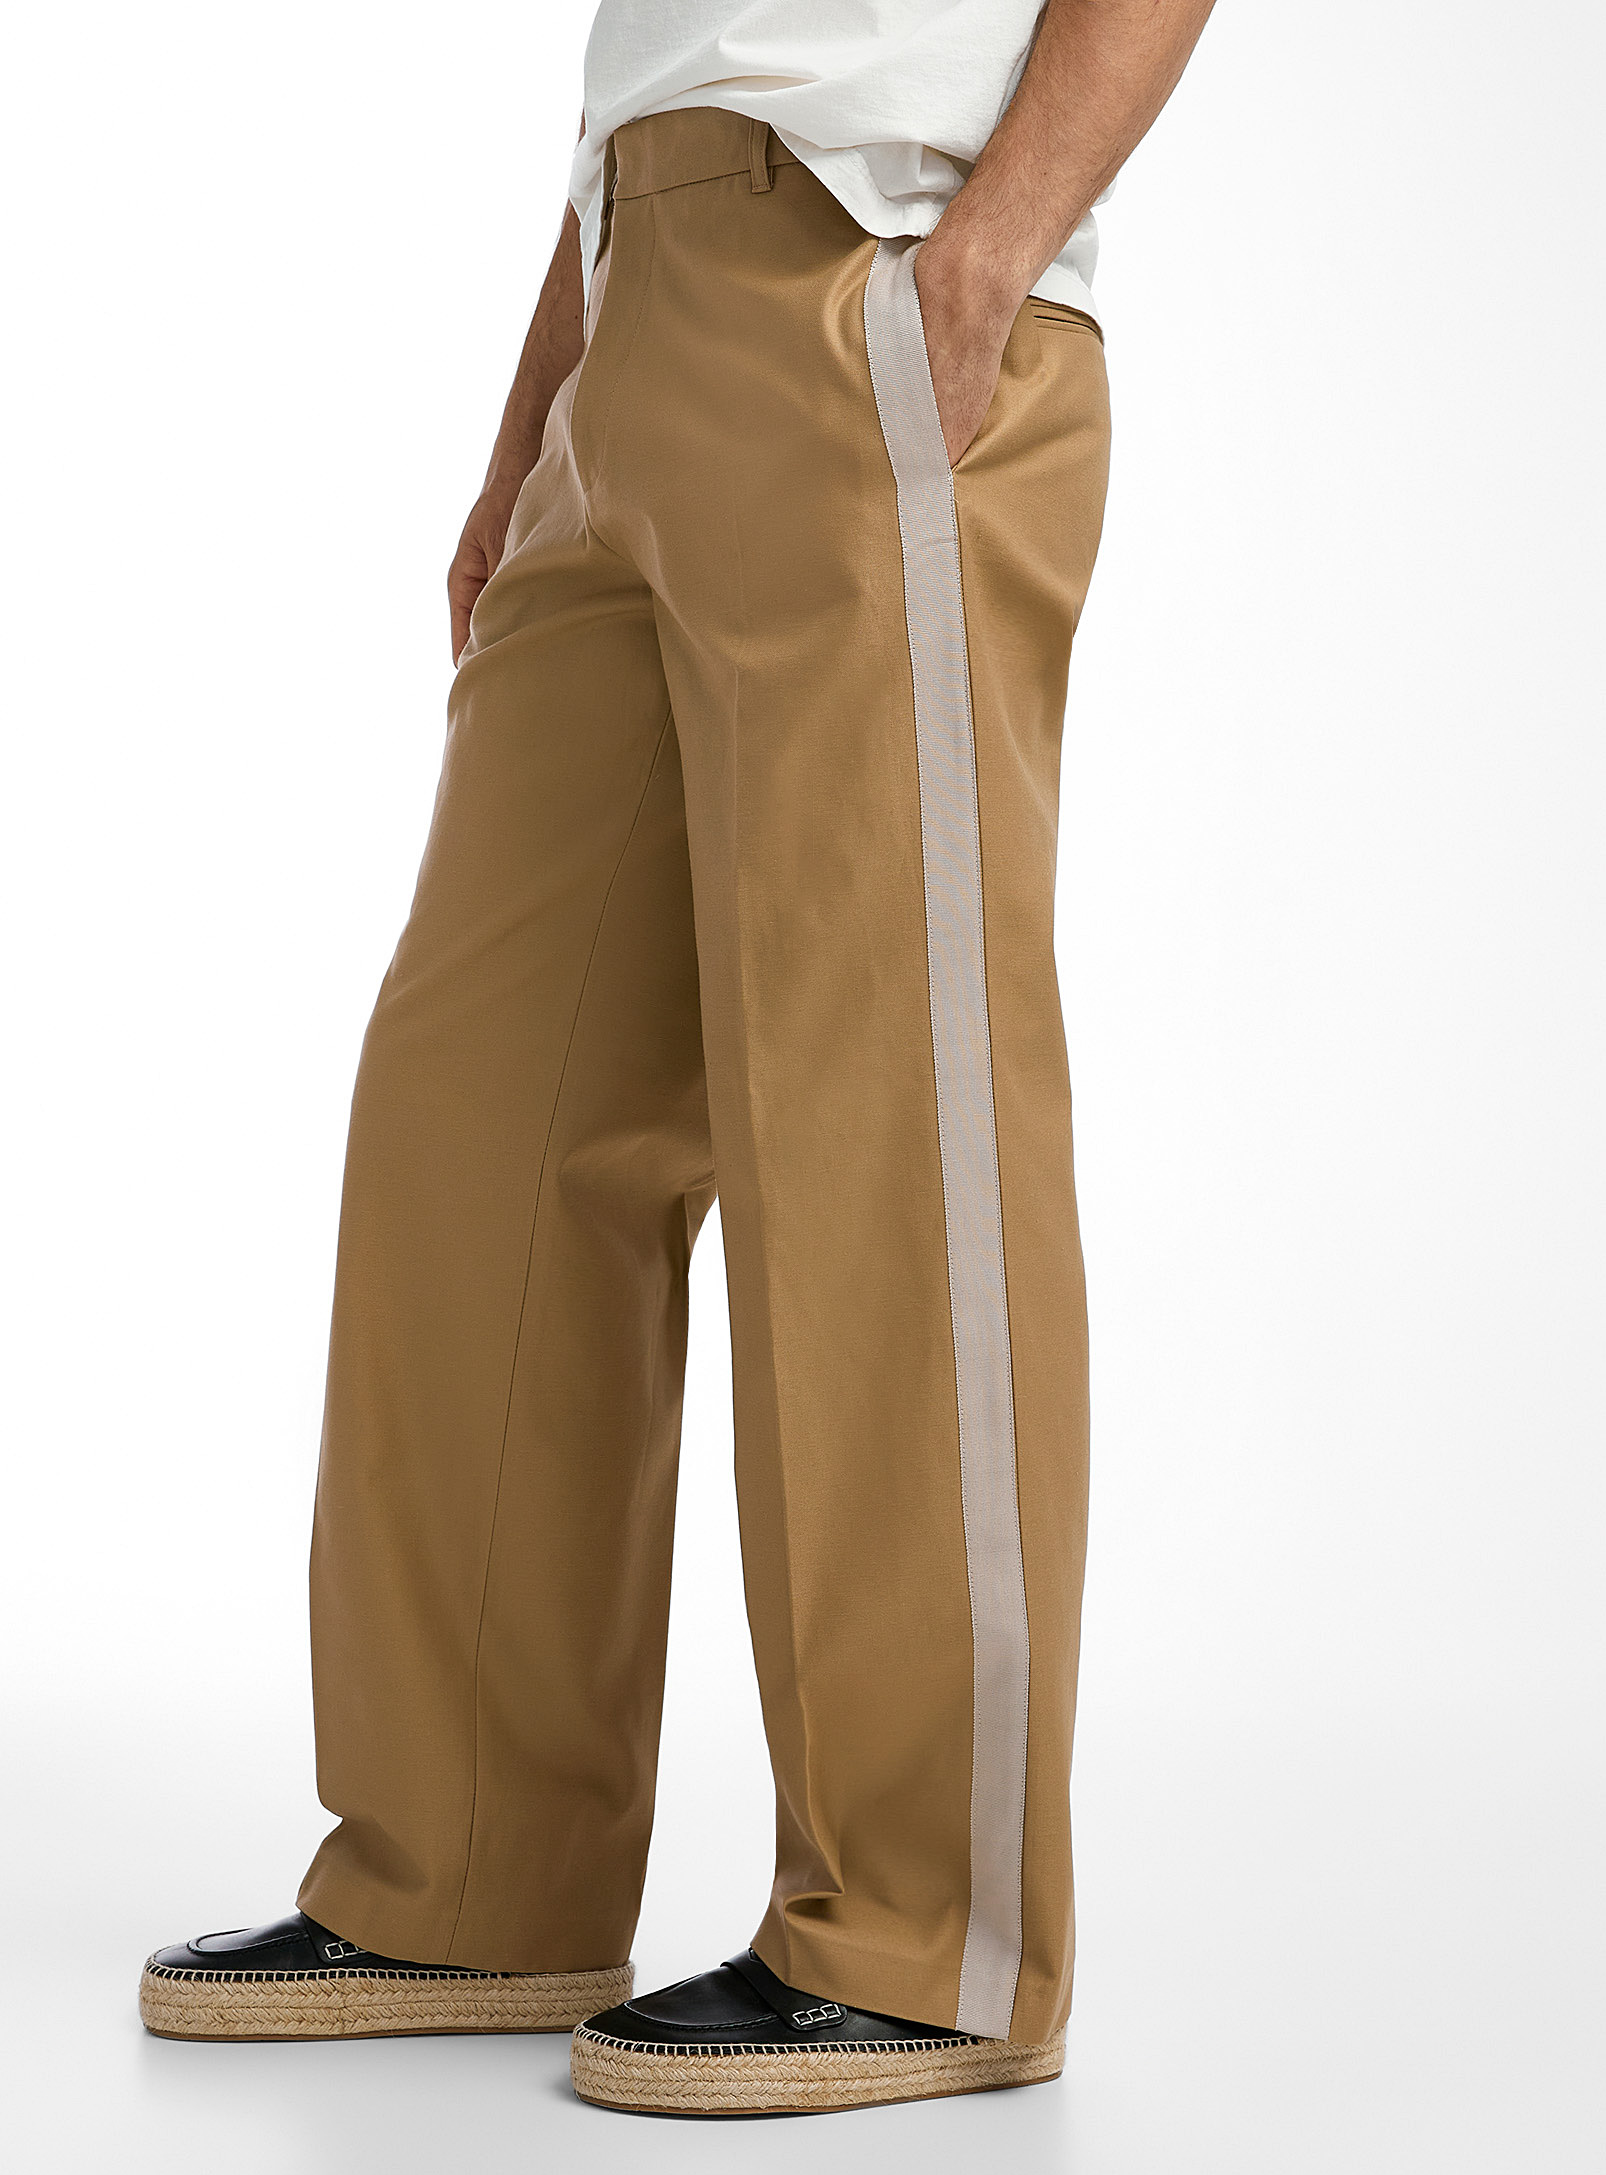 Bluemarble - Le pantalon chino bandes latérales